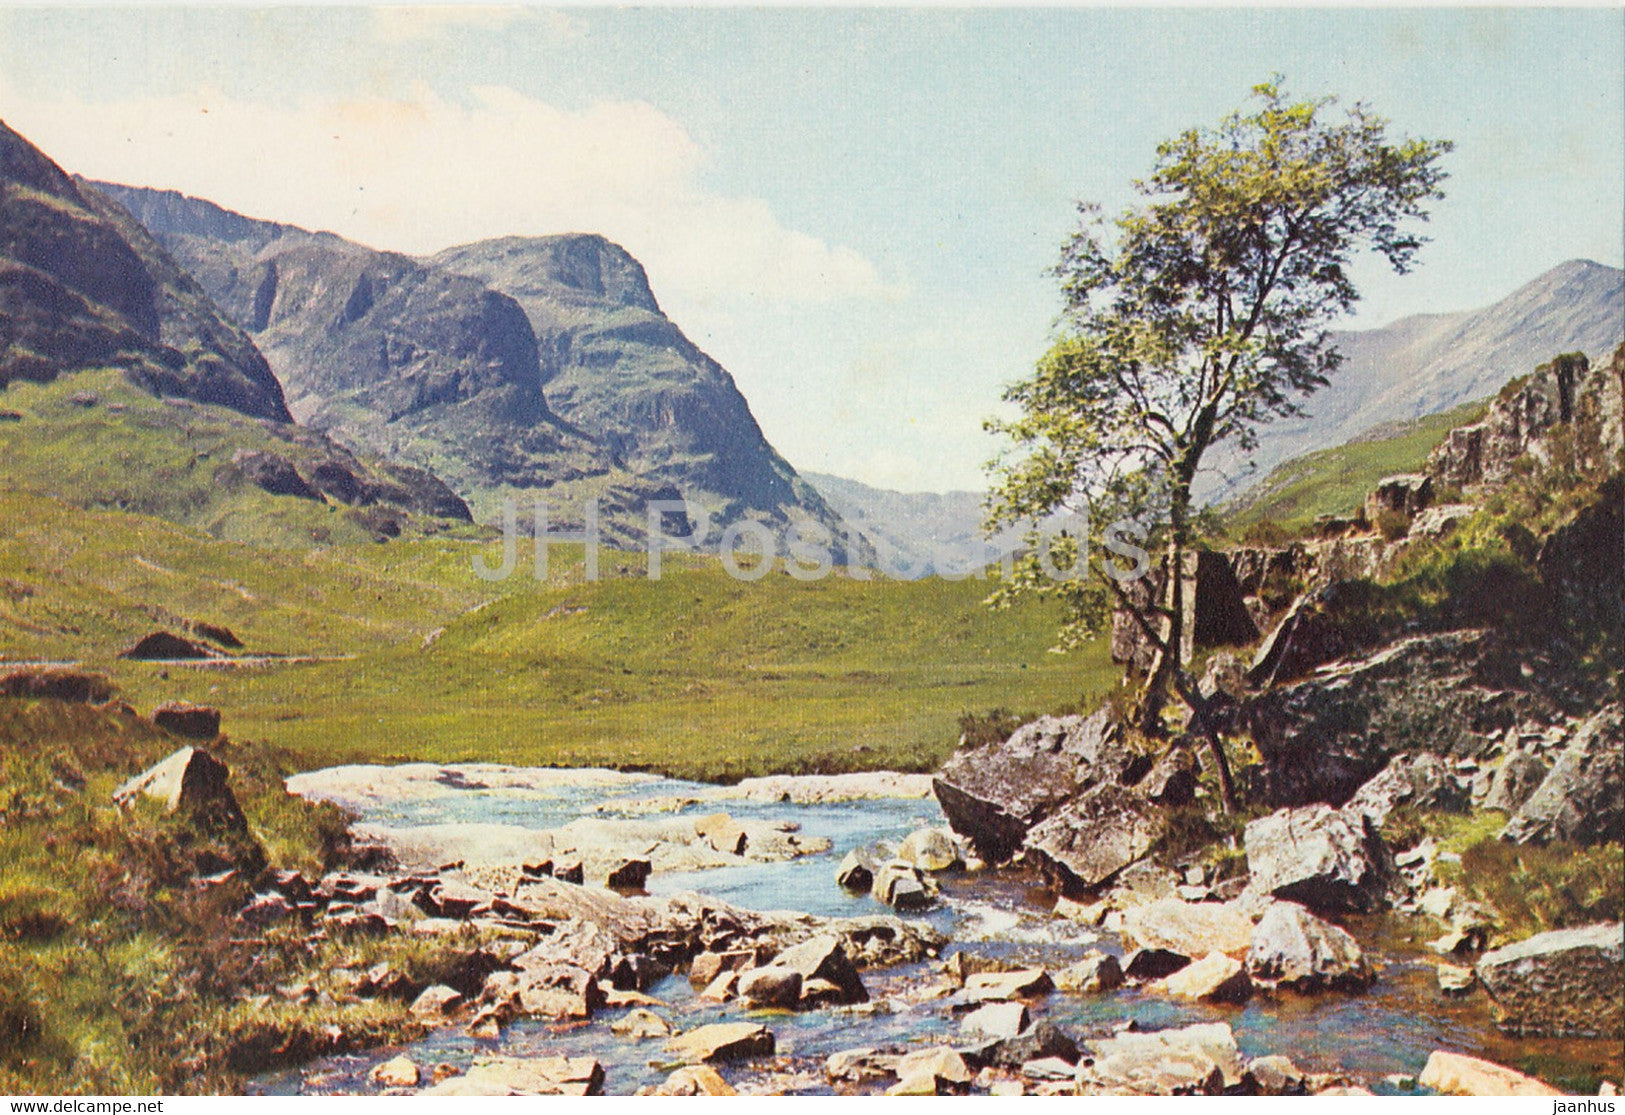 On the river Coe - Glencoe - Argyllshire - Three Sisters Group - Scotland - United Kingdom - unused - JH Postcards